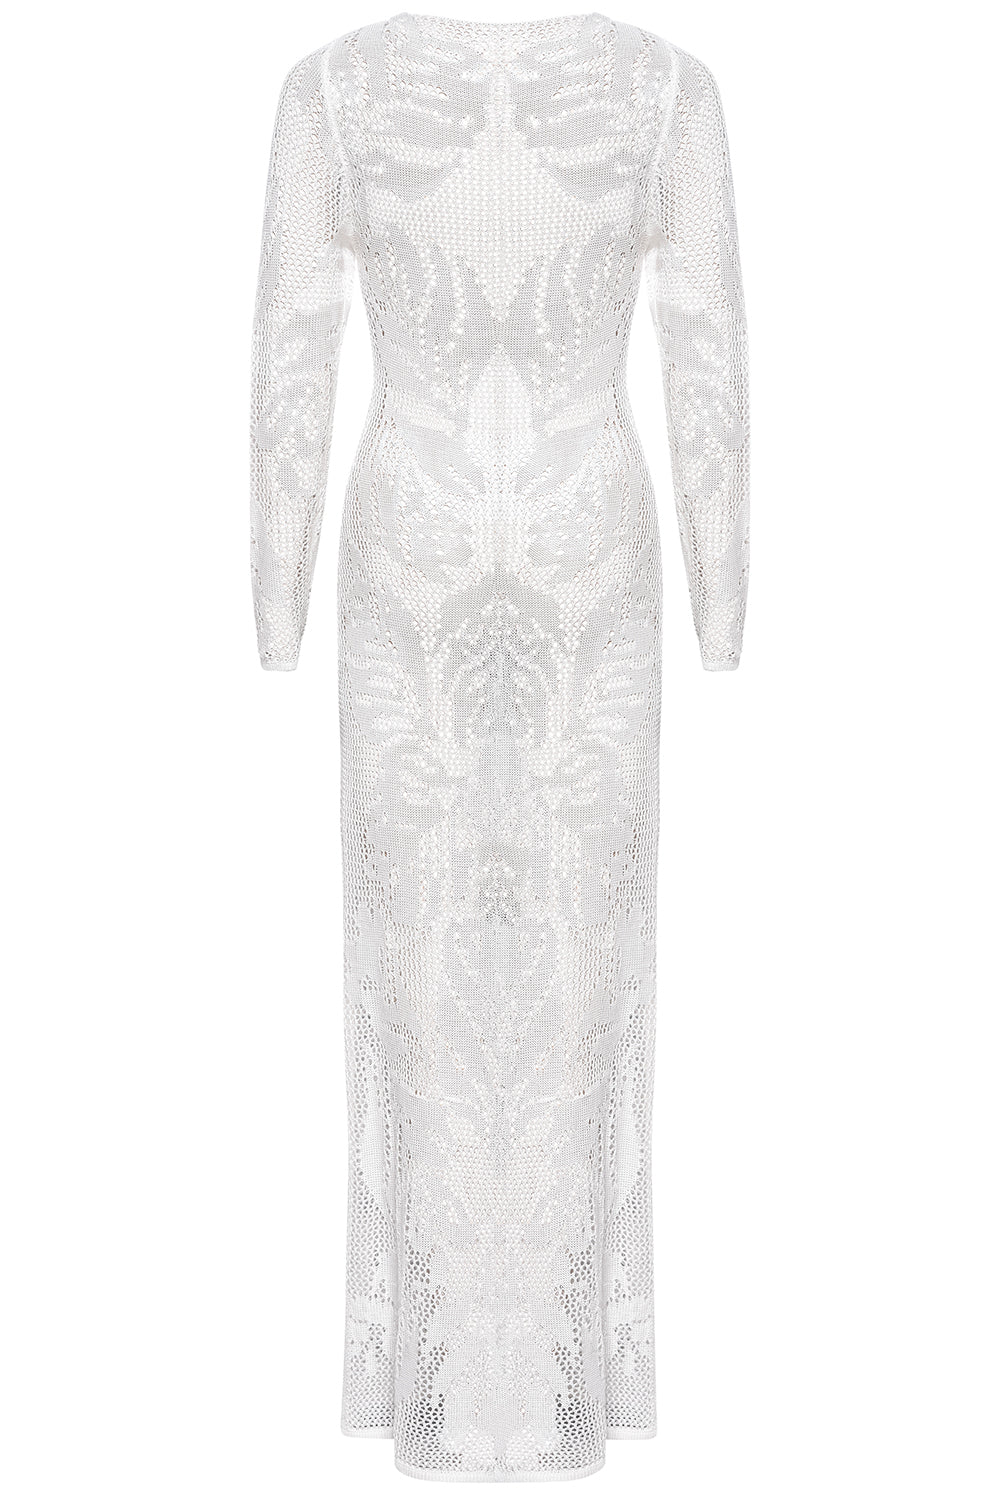 Cancun Crochet White Dress